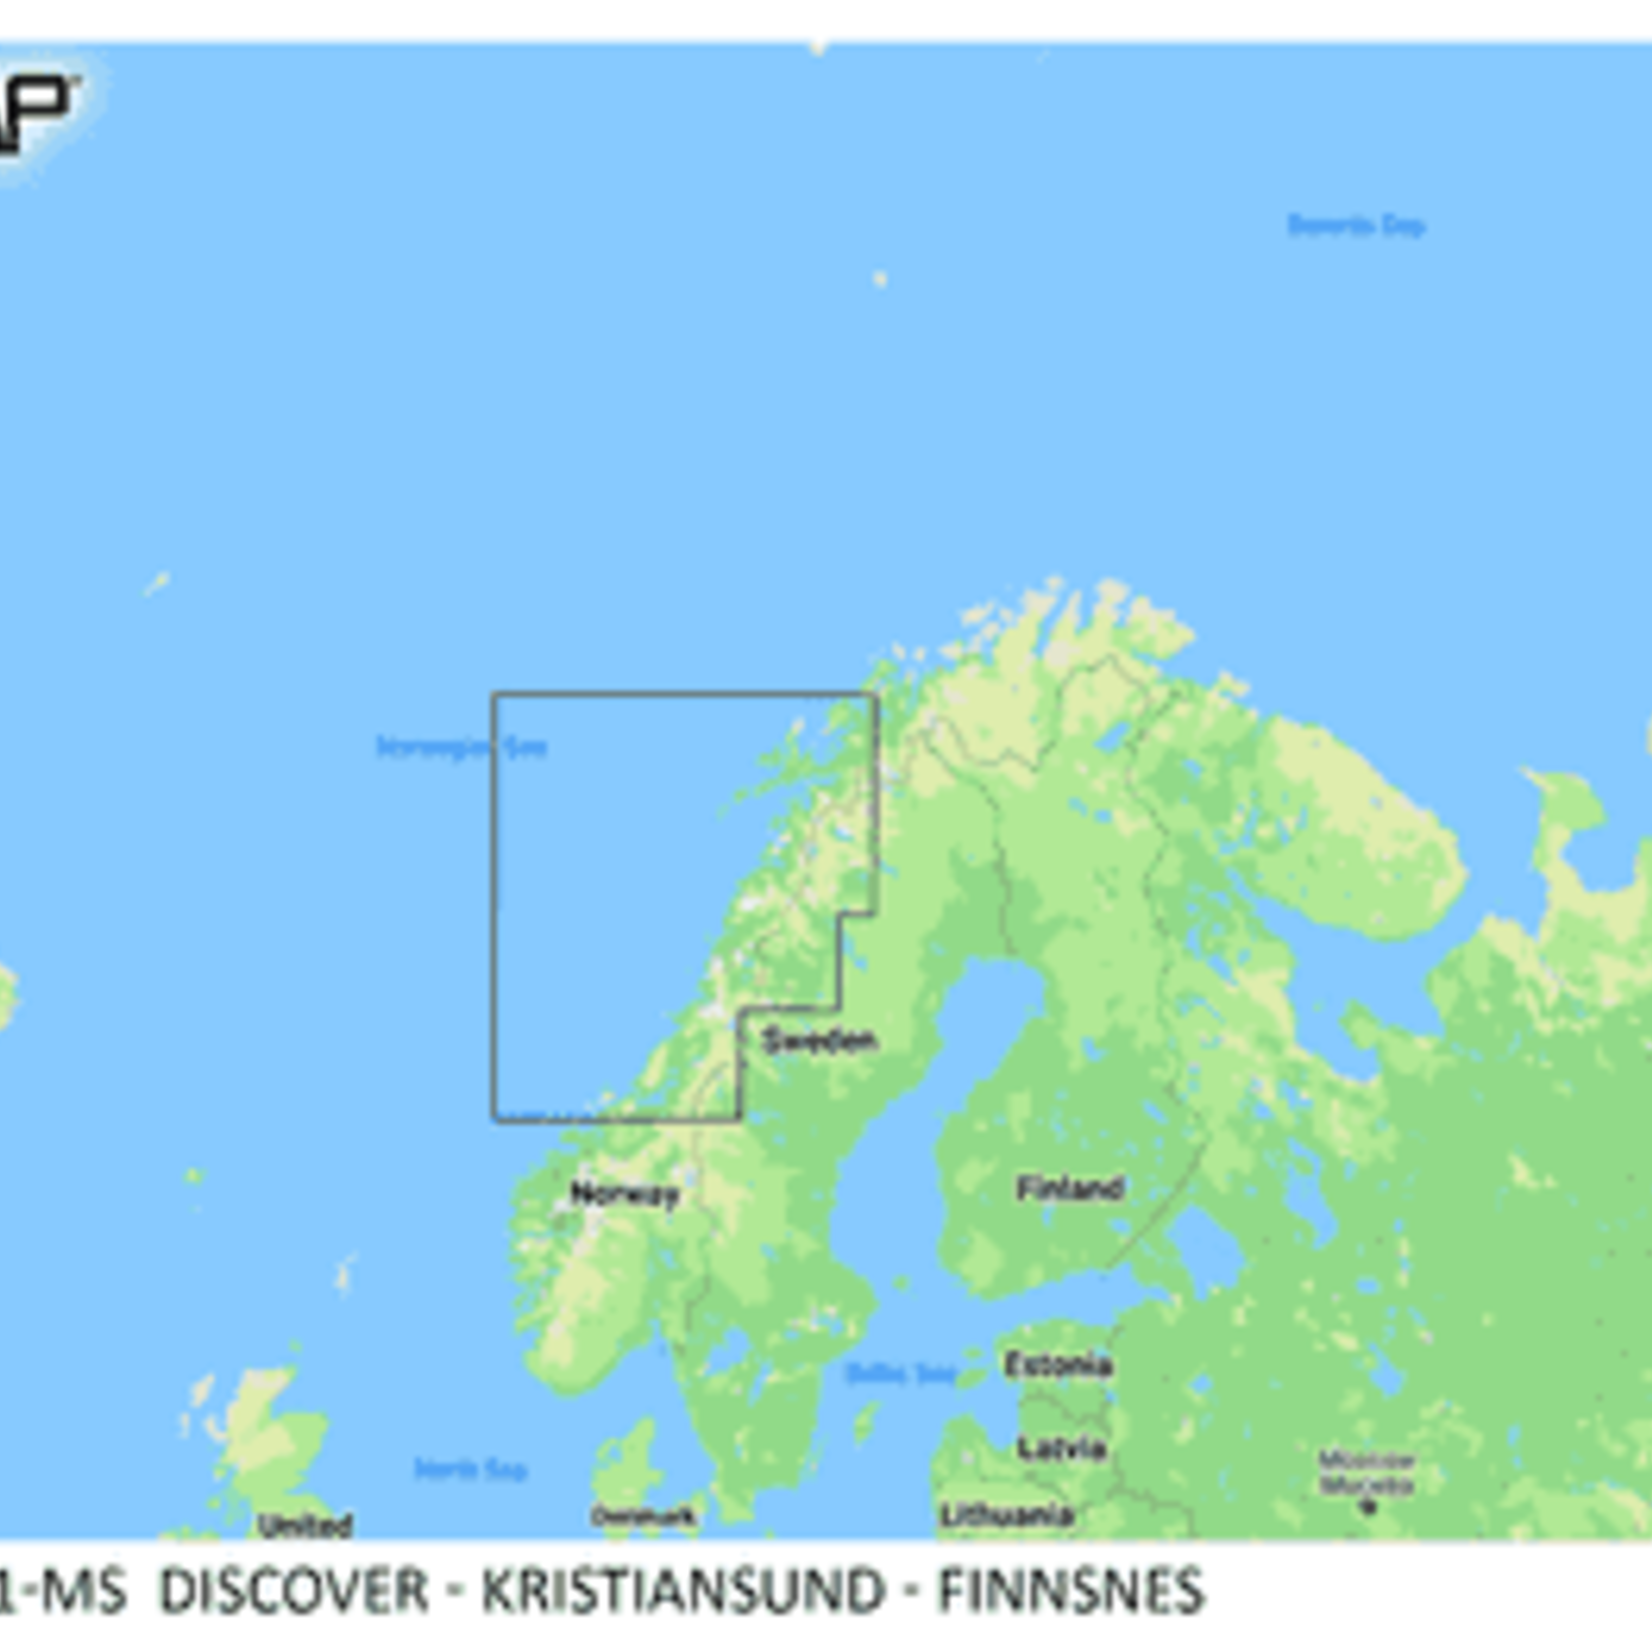 C-MAP DISCOVER - Kristiansund - Finnsnes